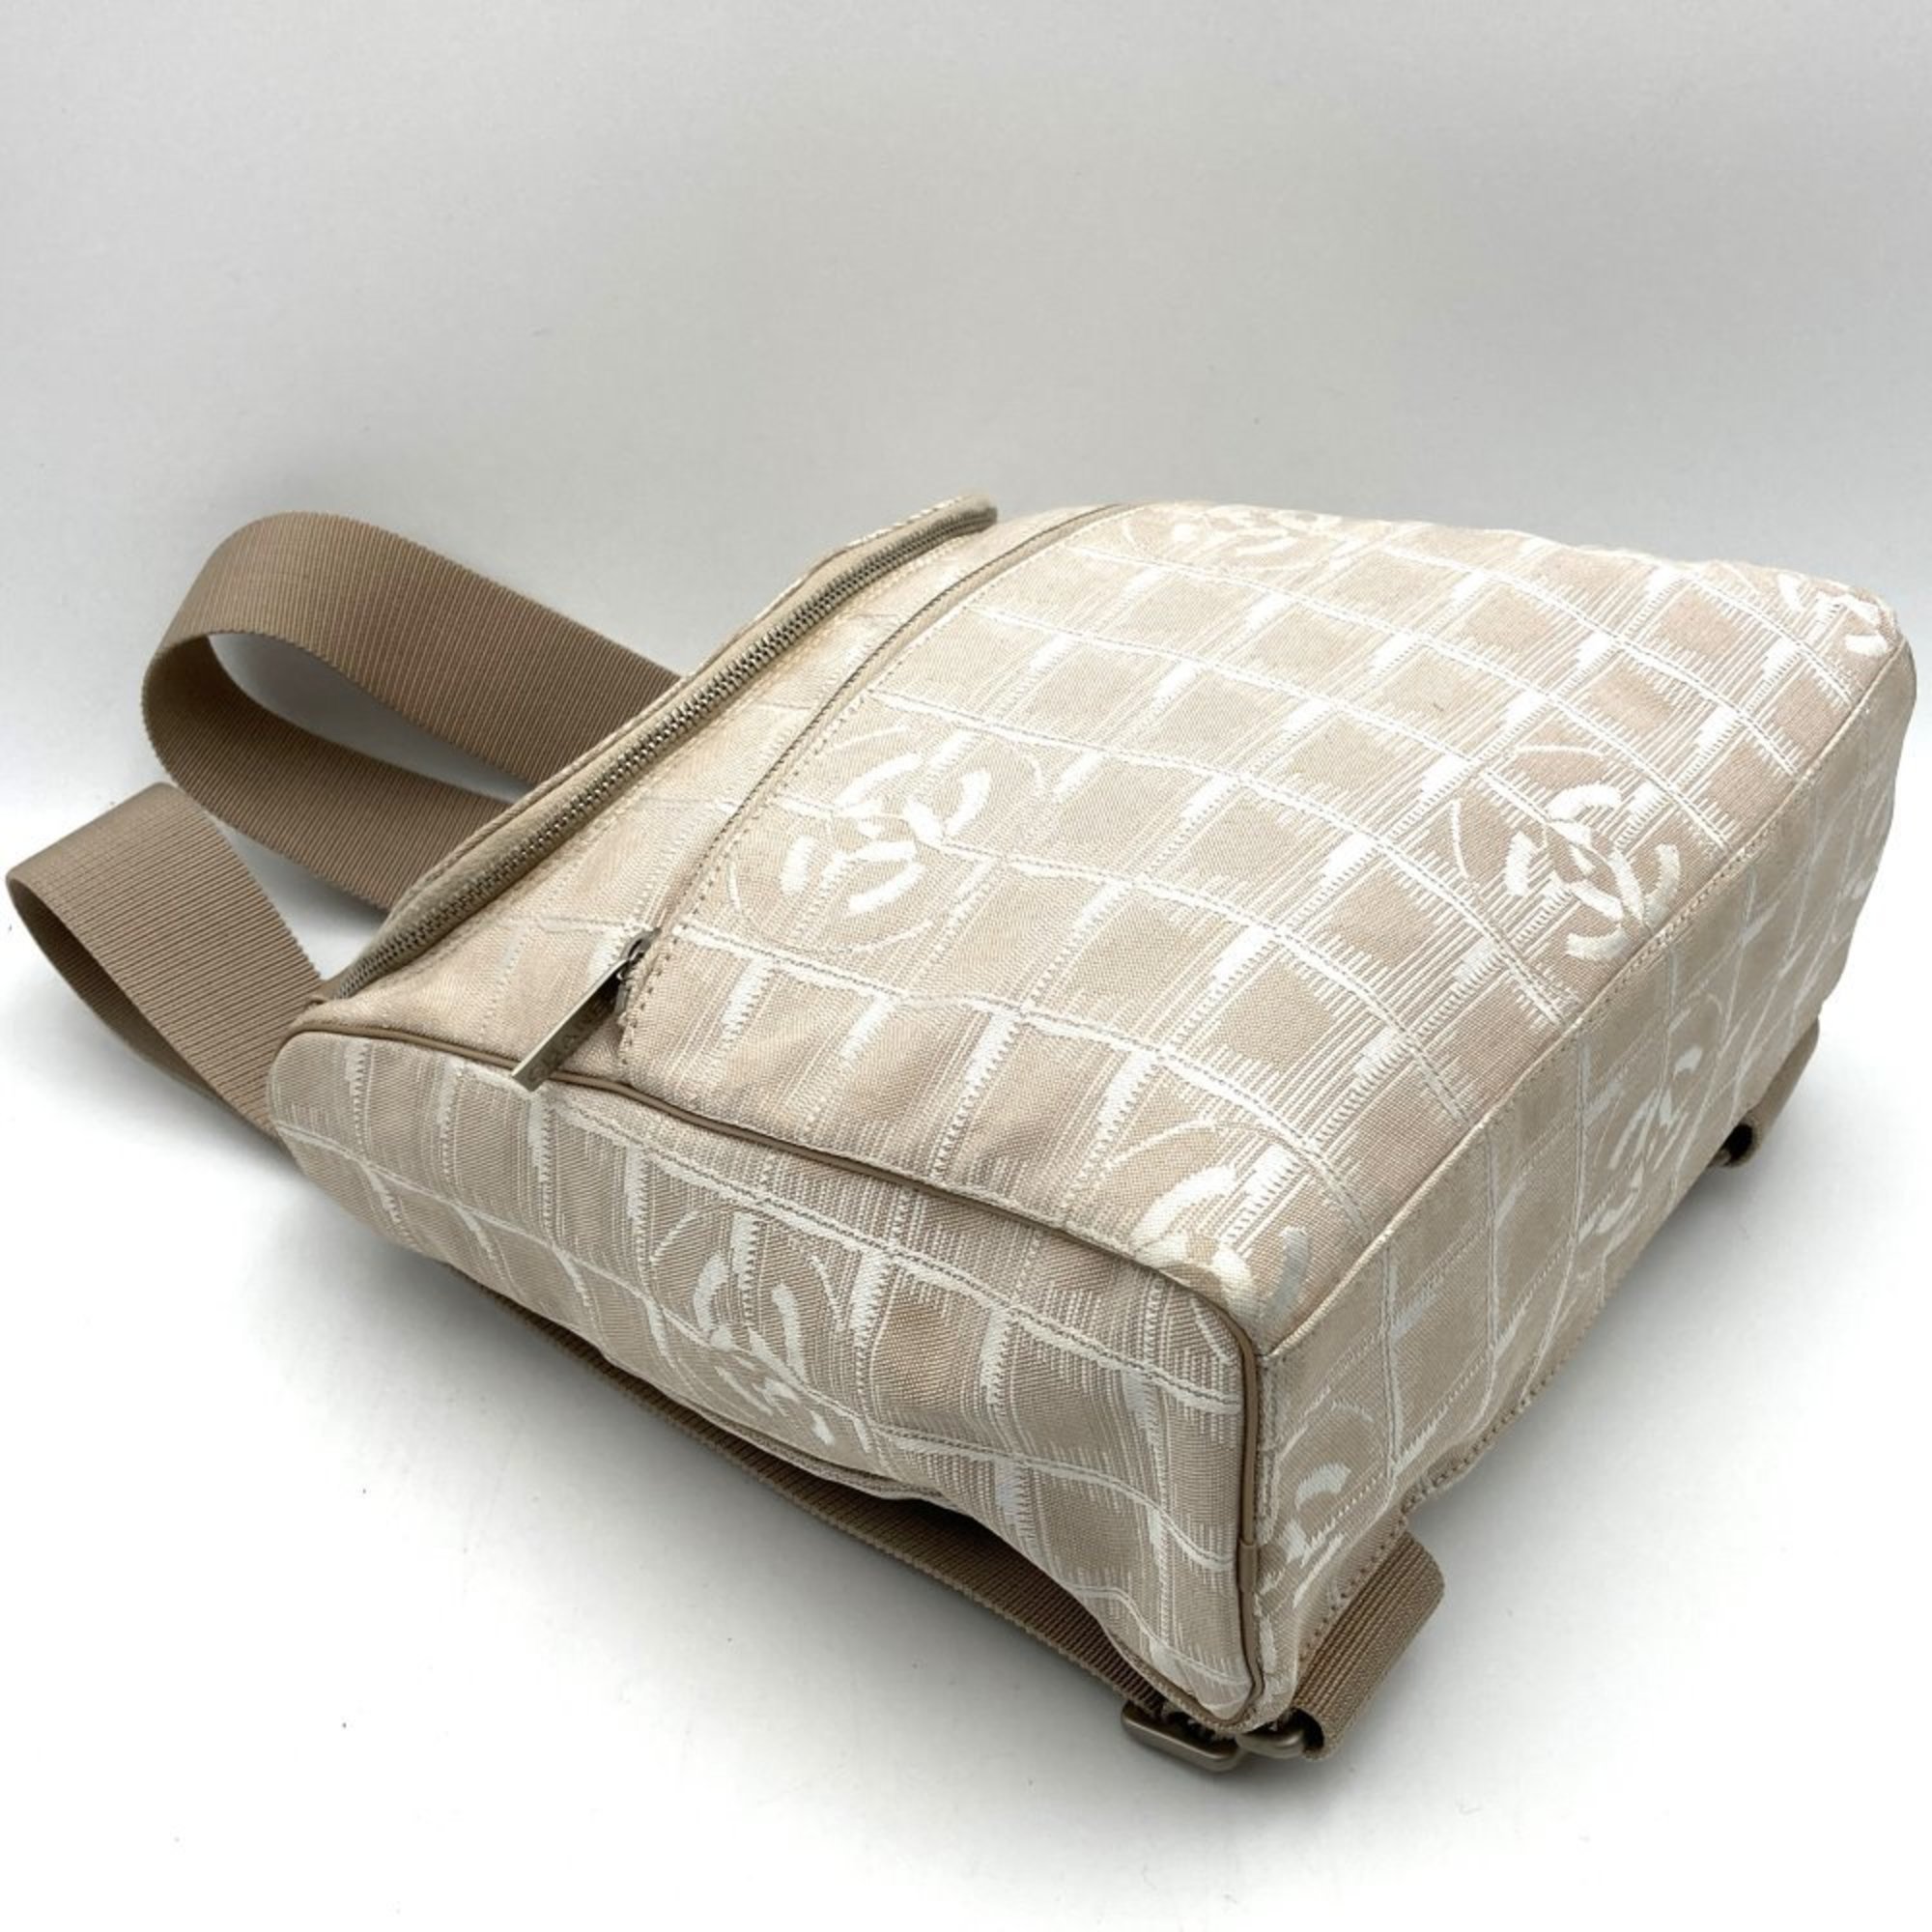 Chanel New Travel Line Backpack Daypack Shoulder Bag 2way Beige Leather Nylon Women's CHANEL